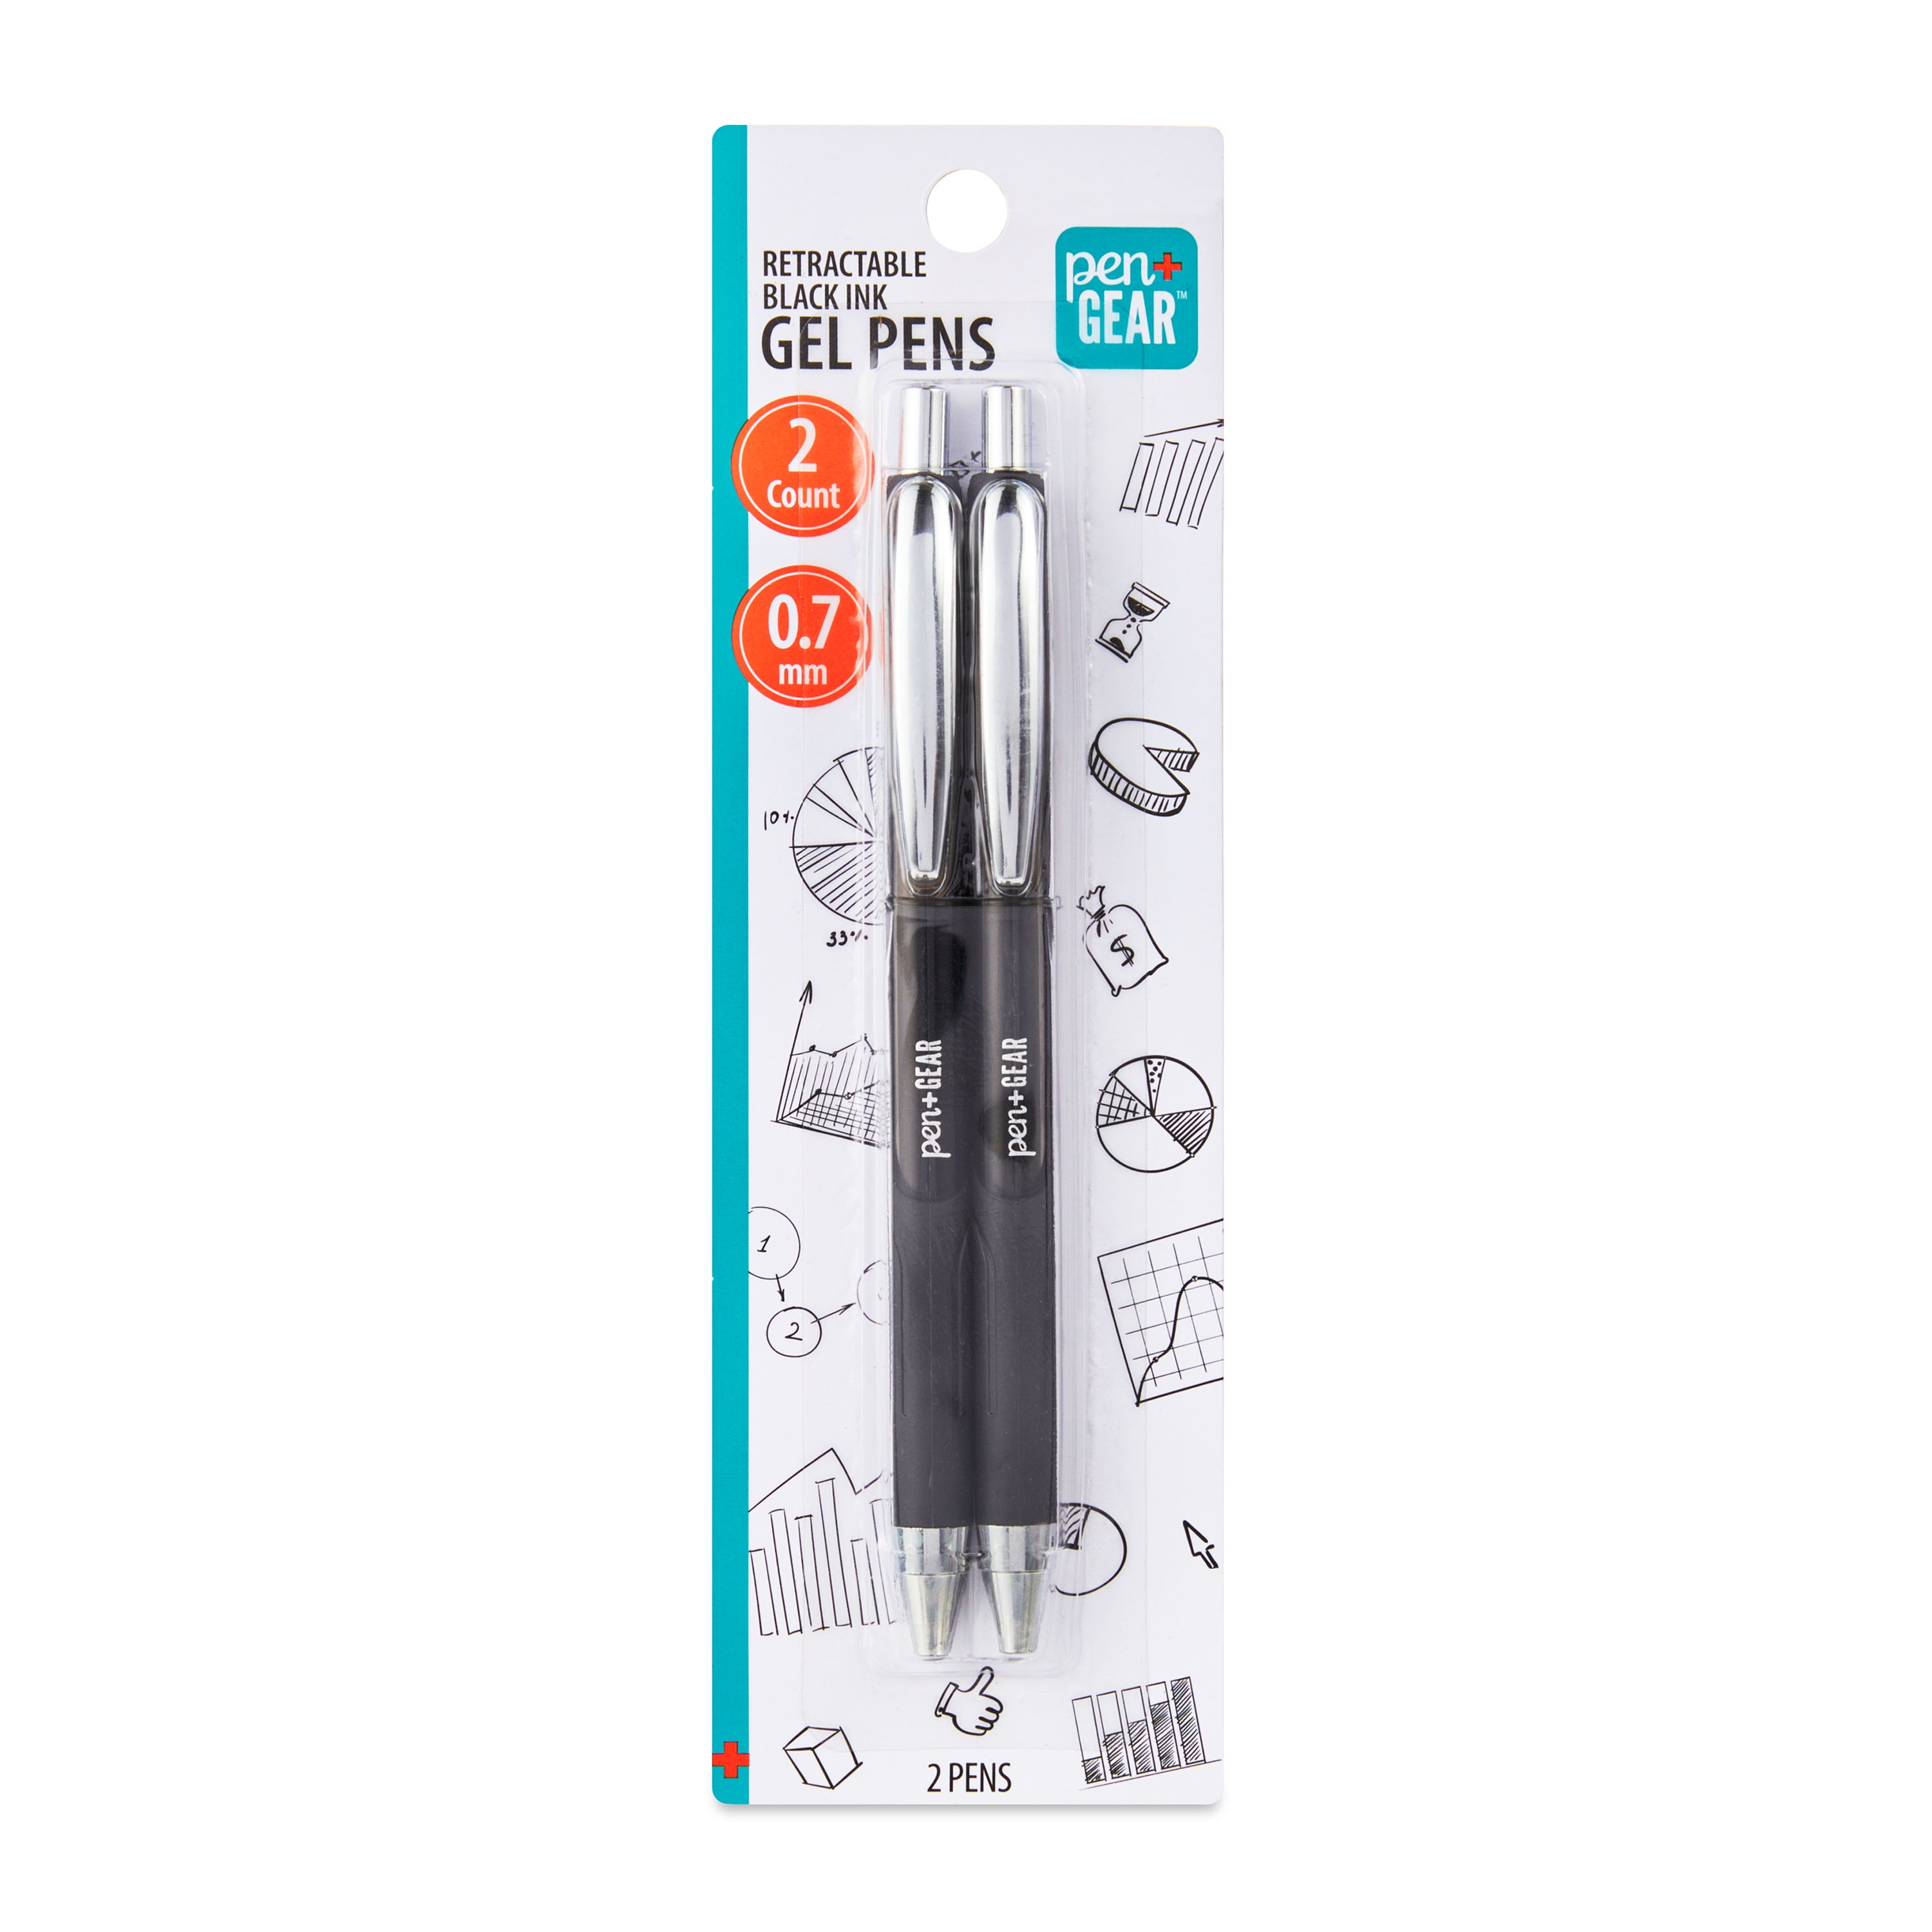 Pen+Gear Retractable Gel Pens, Medium Point, 0.7 mm, Black, 2 Count 